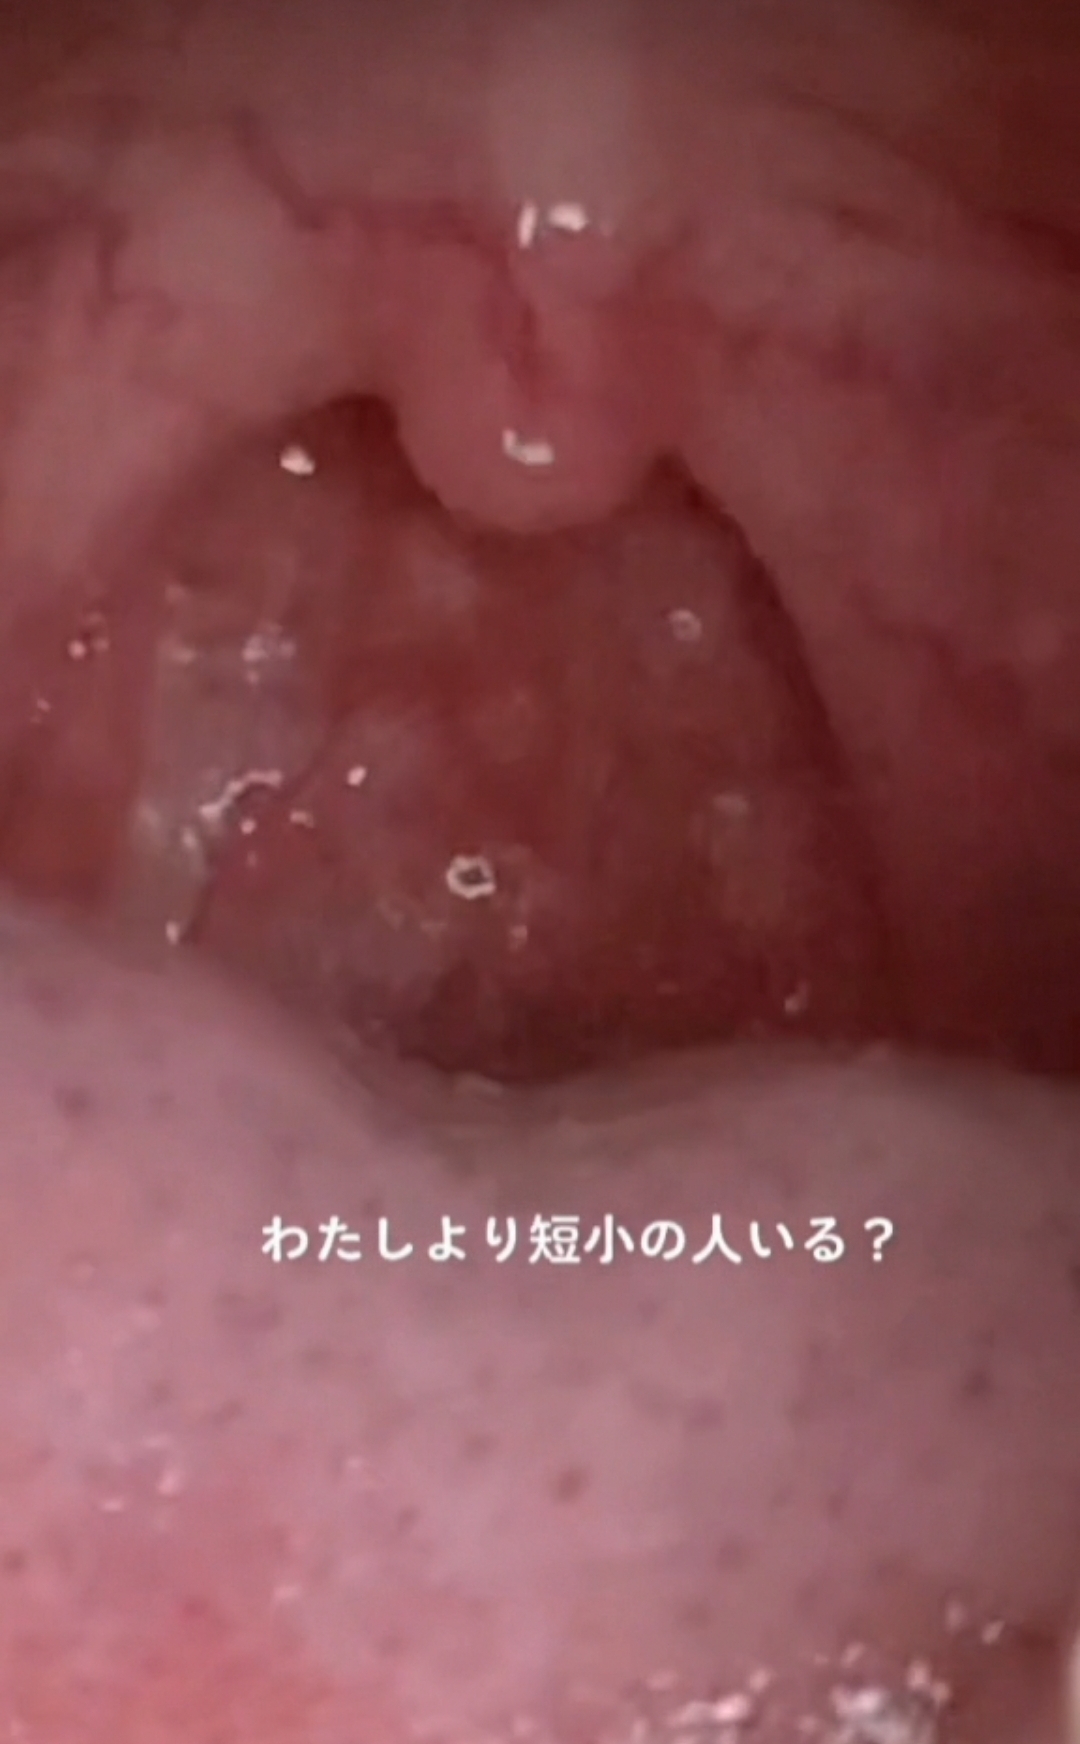 japanese girl uvula 2